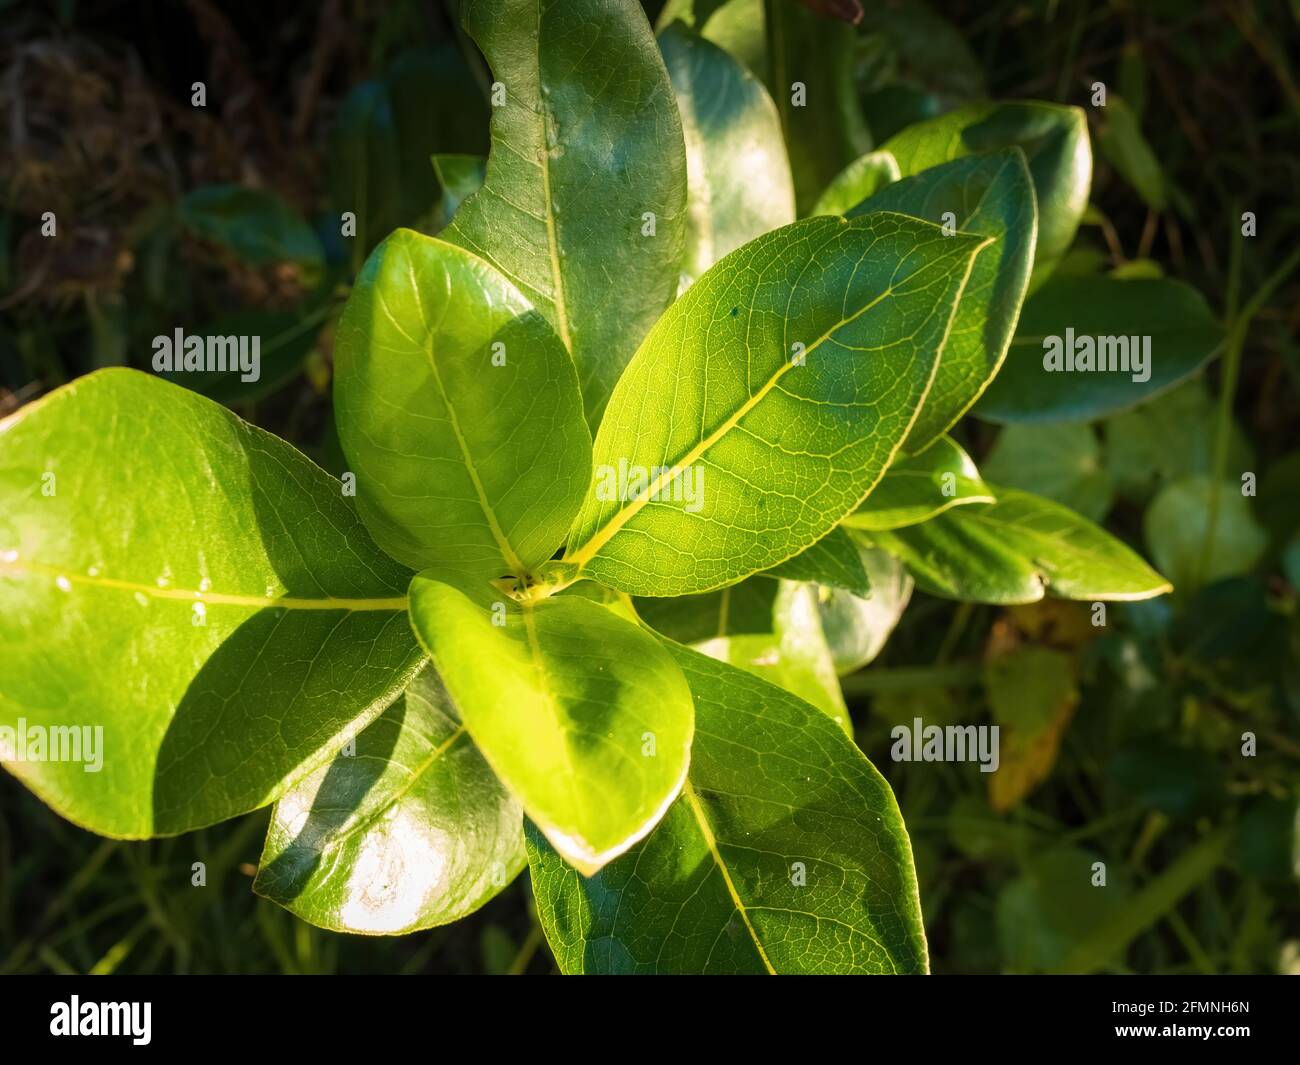 Coprosma macrocarpa shrub in forest Stock Photo